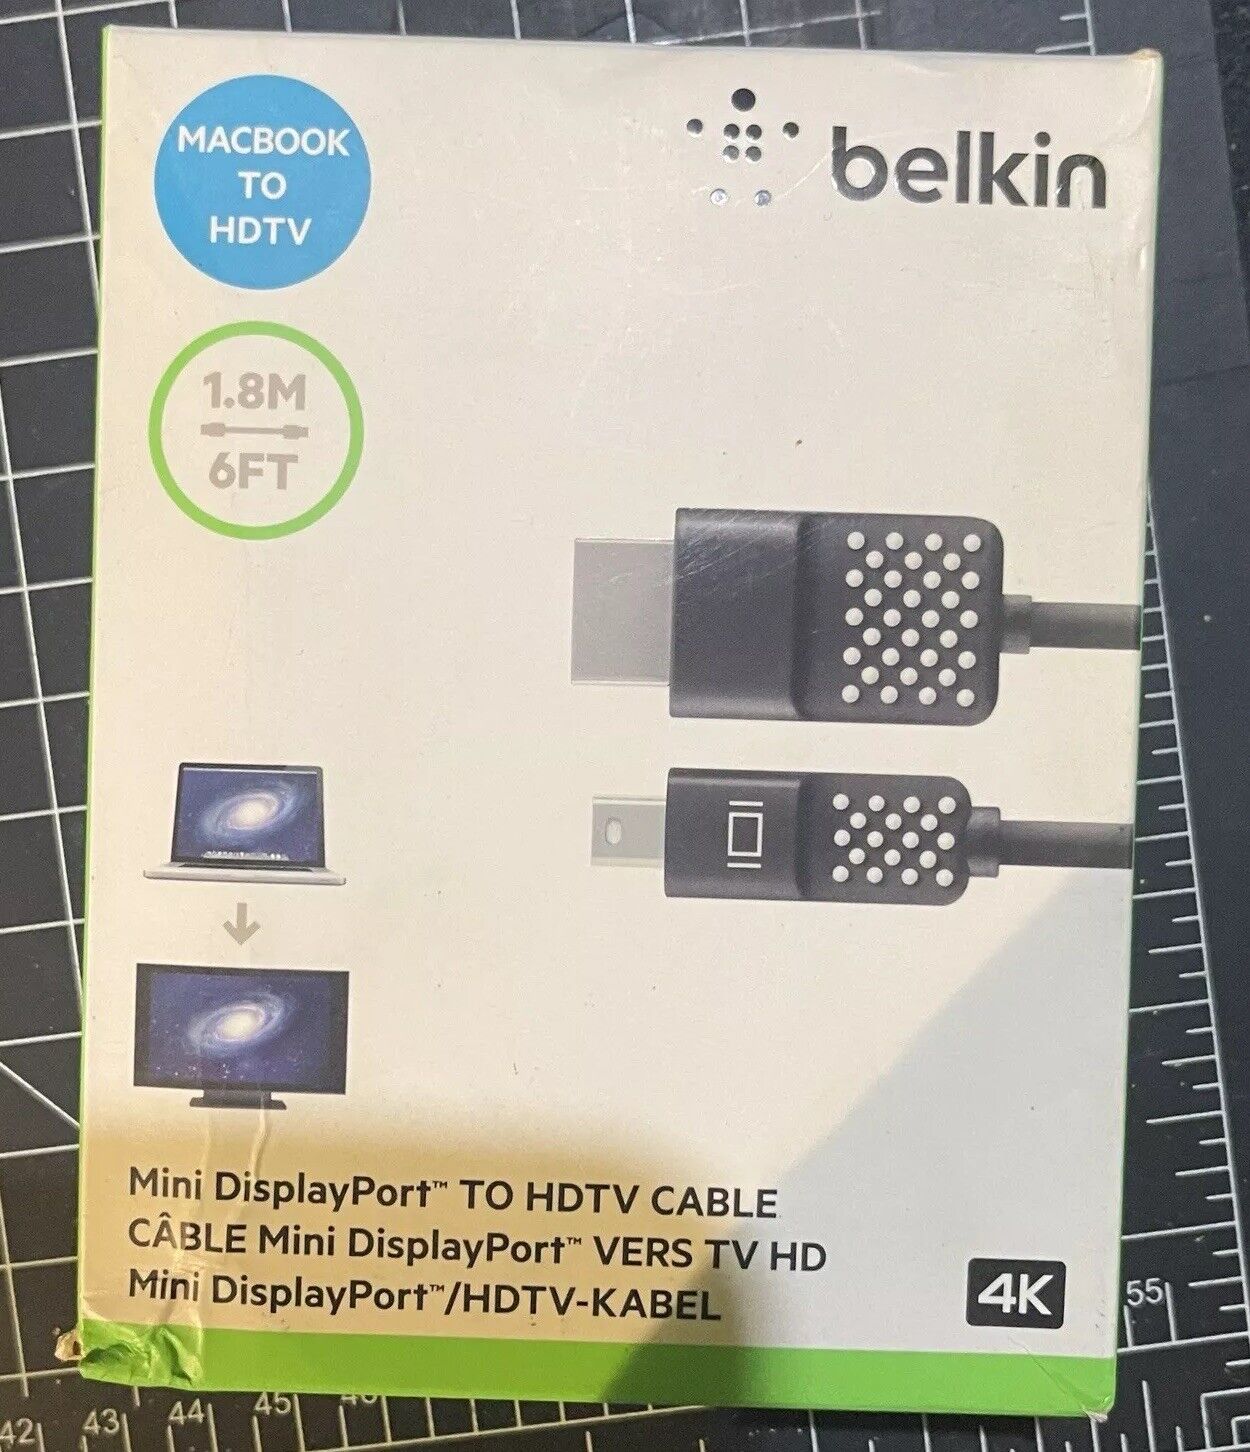 Belkin Mini DisplayPort TO HDTV CABLE CABLE Mini DisplayPort